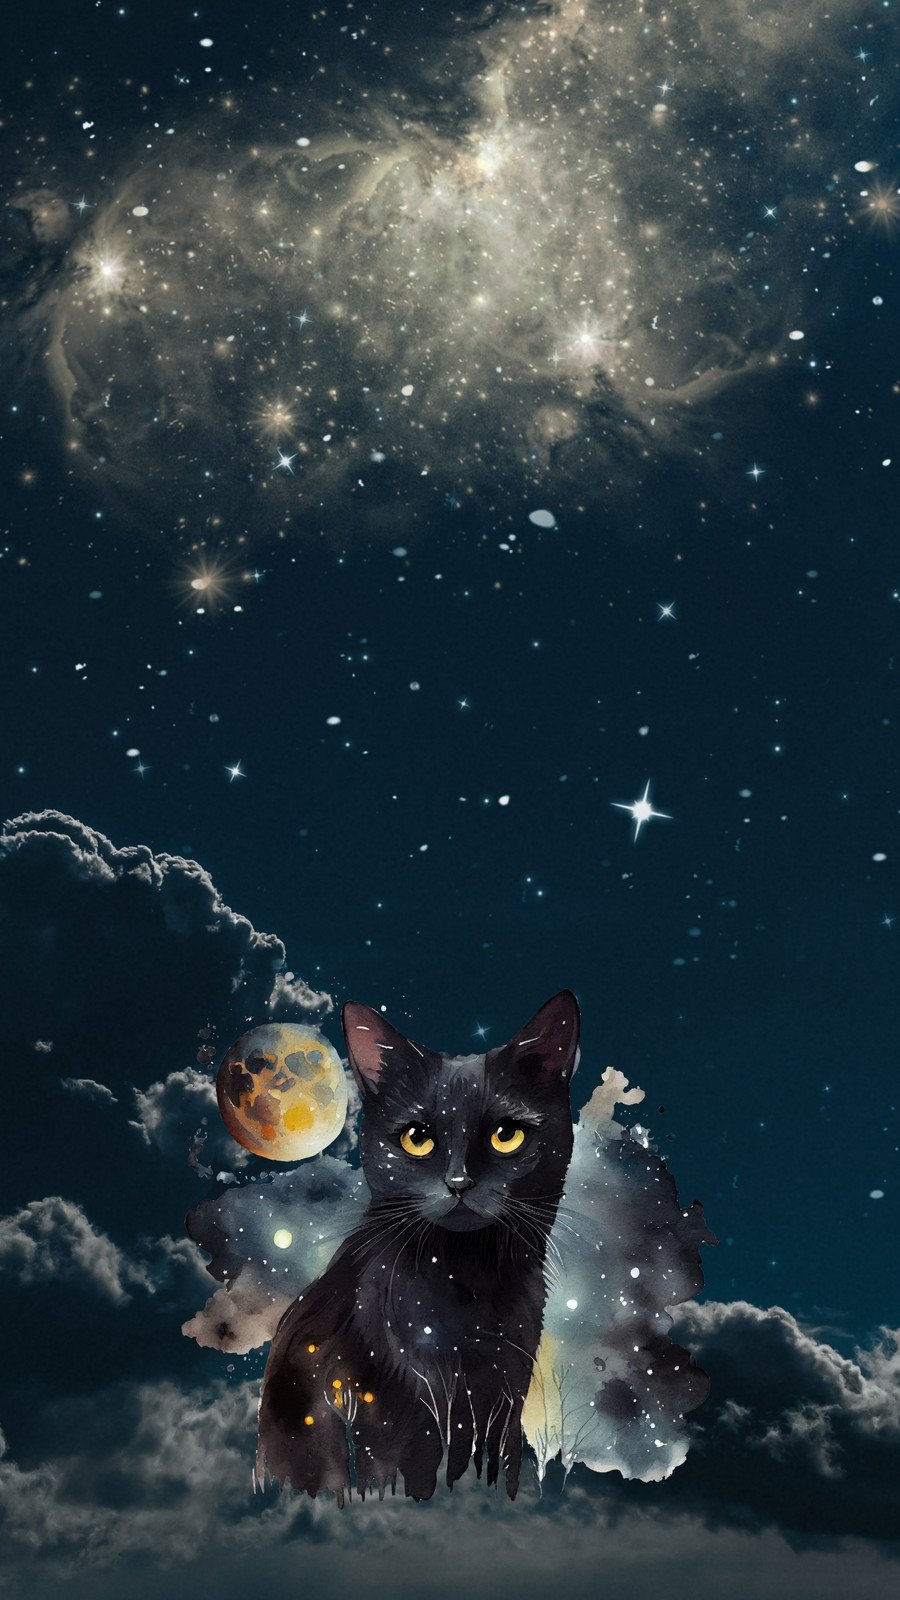 space cat wallpaper ipad